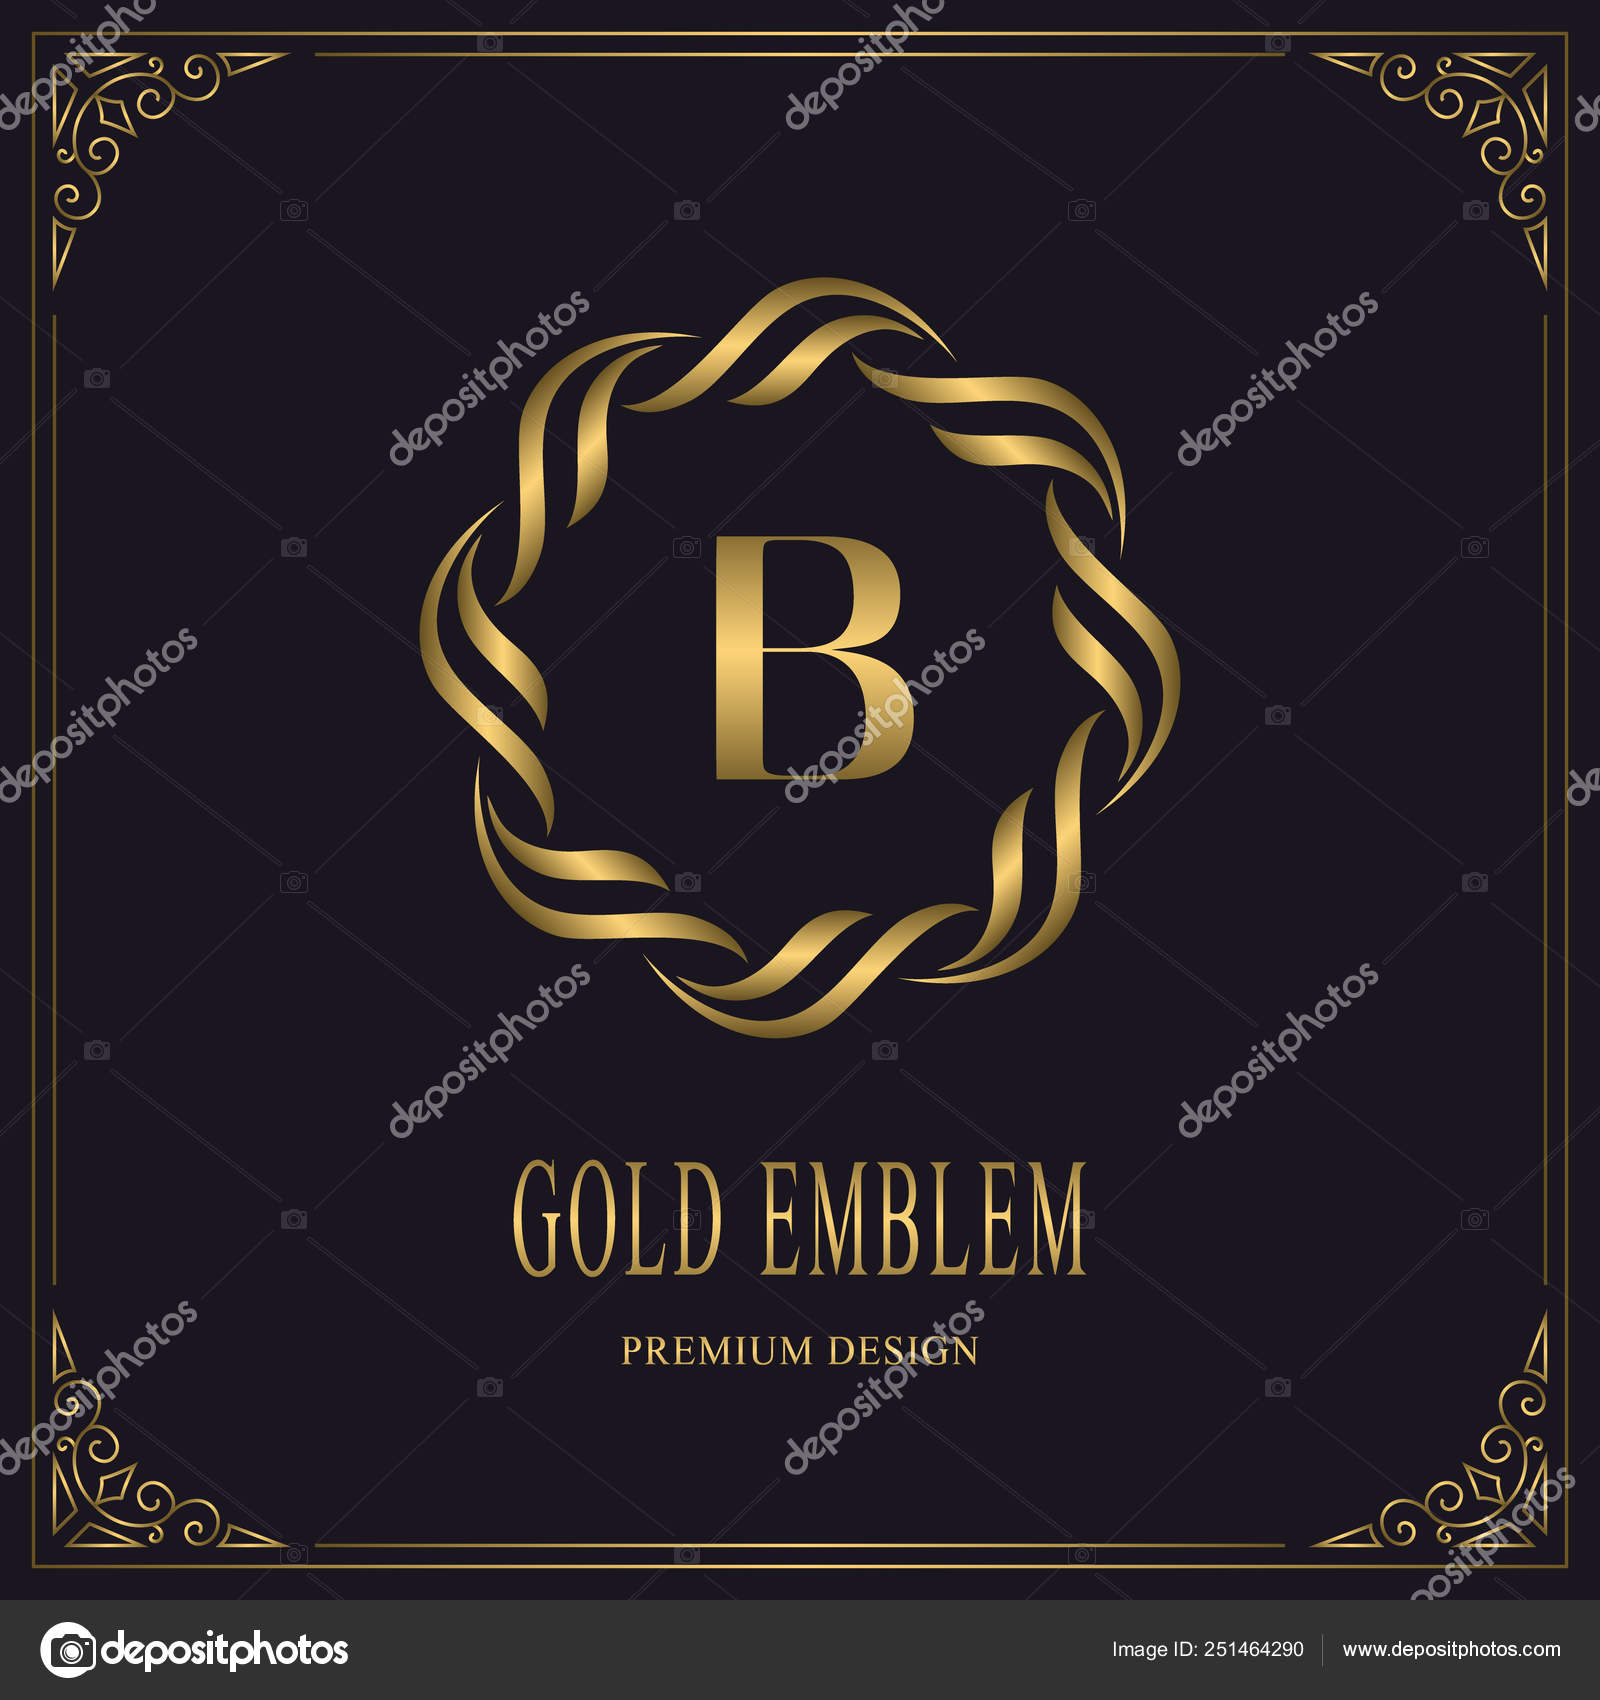 Gold Emblem Of The Weaving Circle Letter B Monogram Graceful